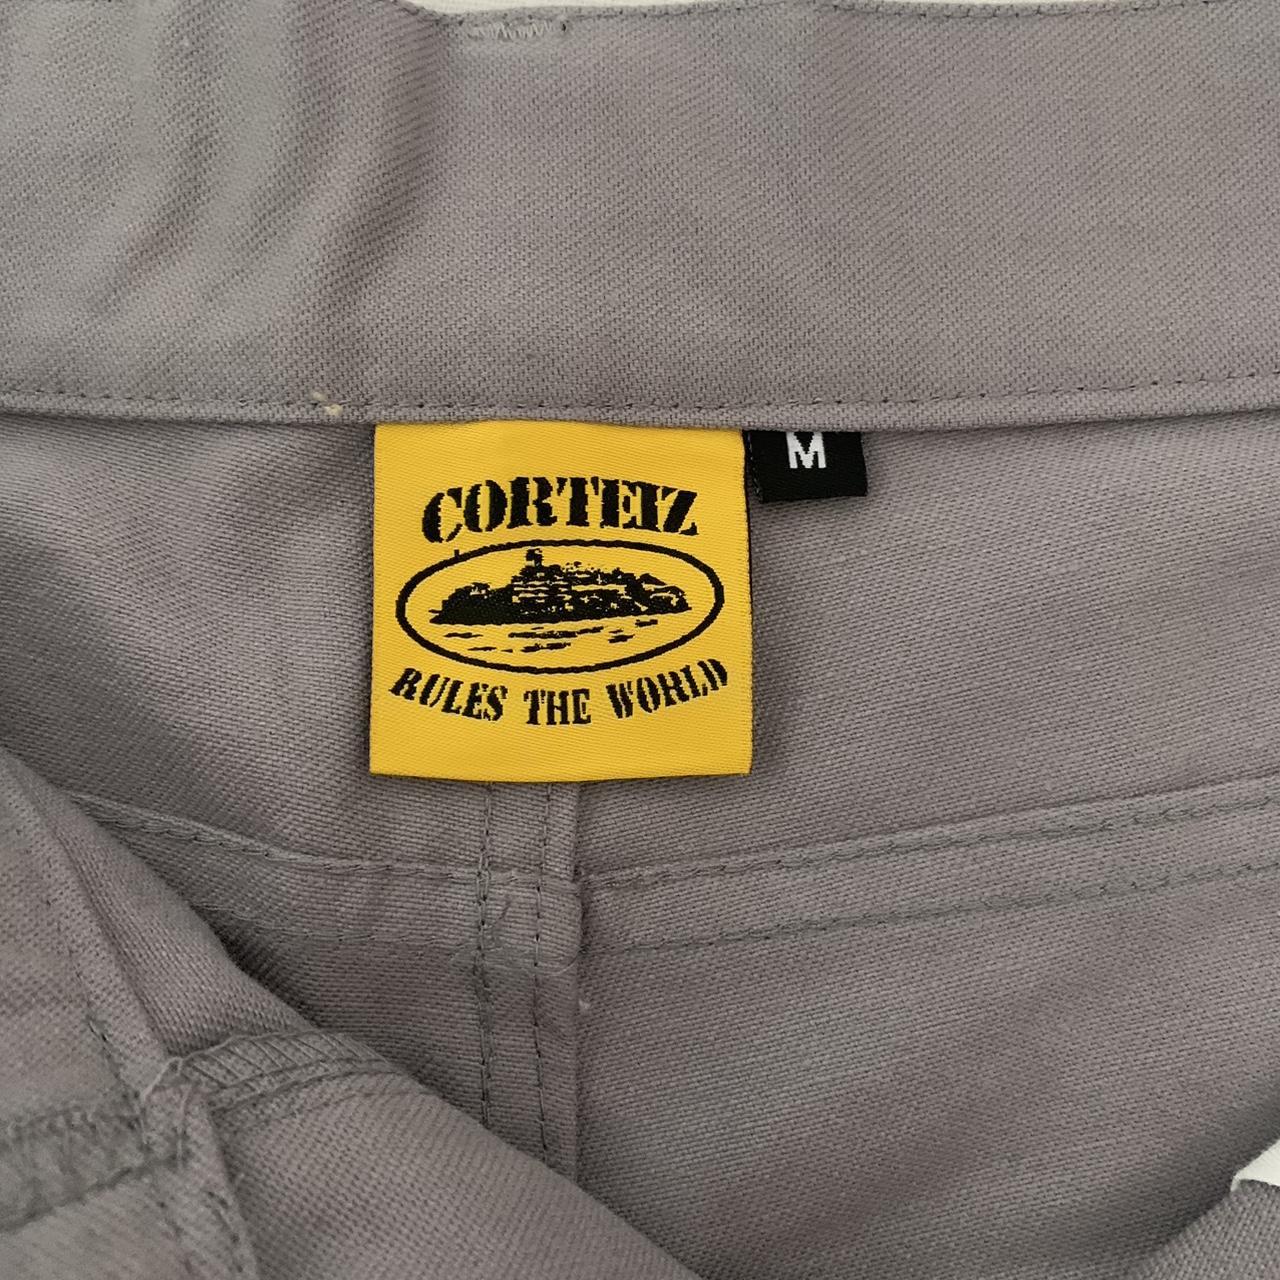 Corteiz carpenter pants Brand new with packaging - Depop